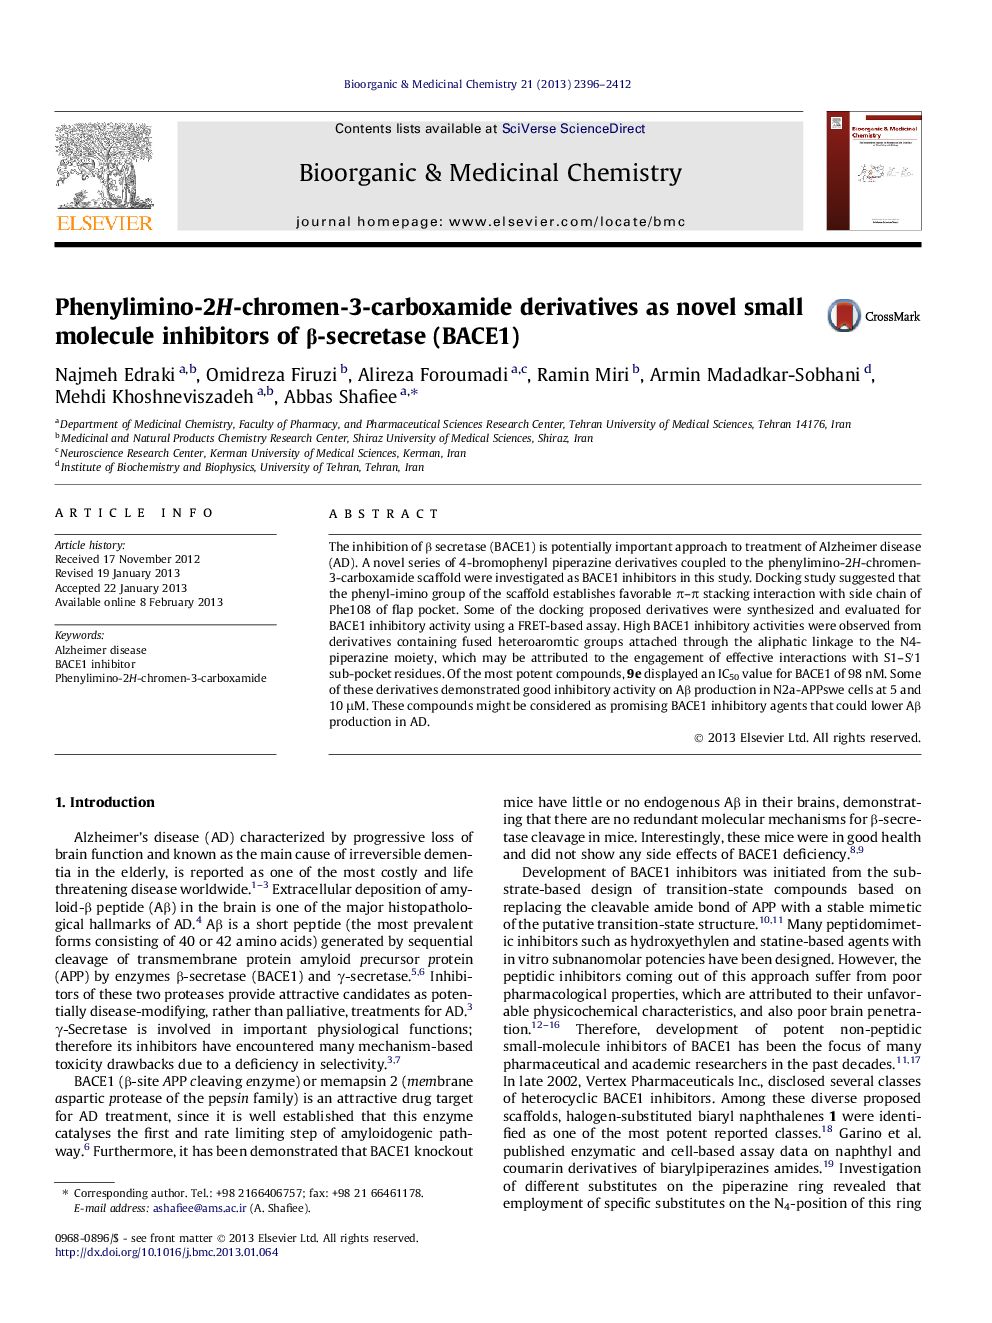 Phenylimino-2H-chromen-3-carboxamide derivatives as novel small molecule inhibitors of β-secretase (BACE1)